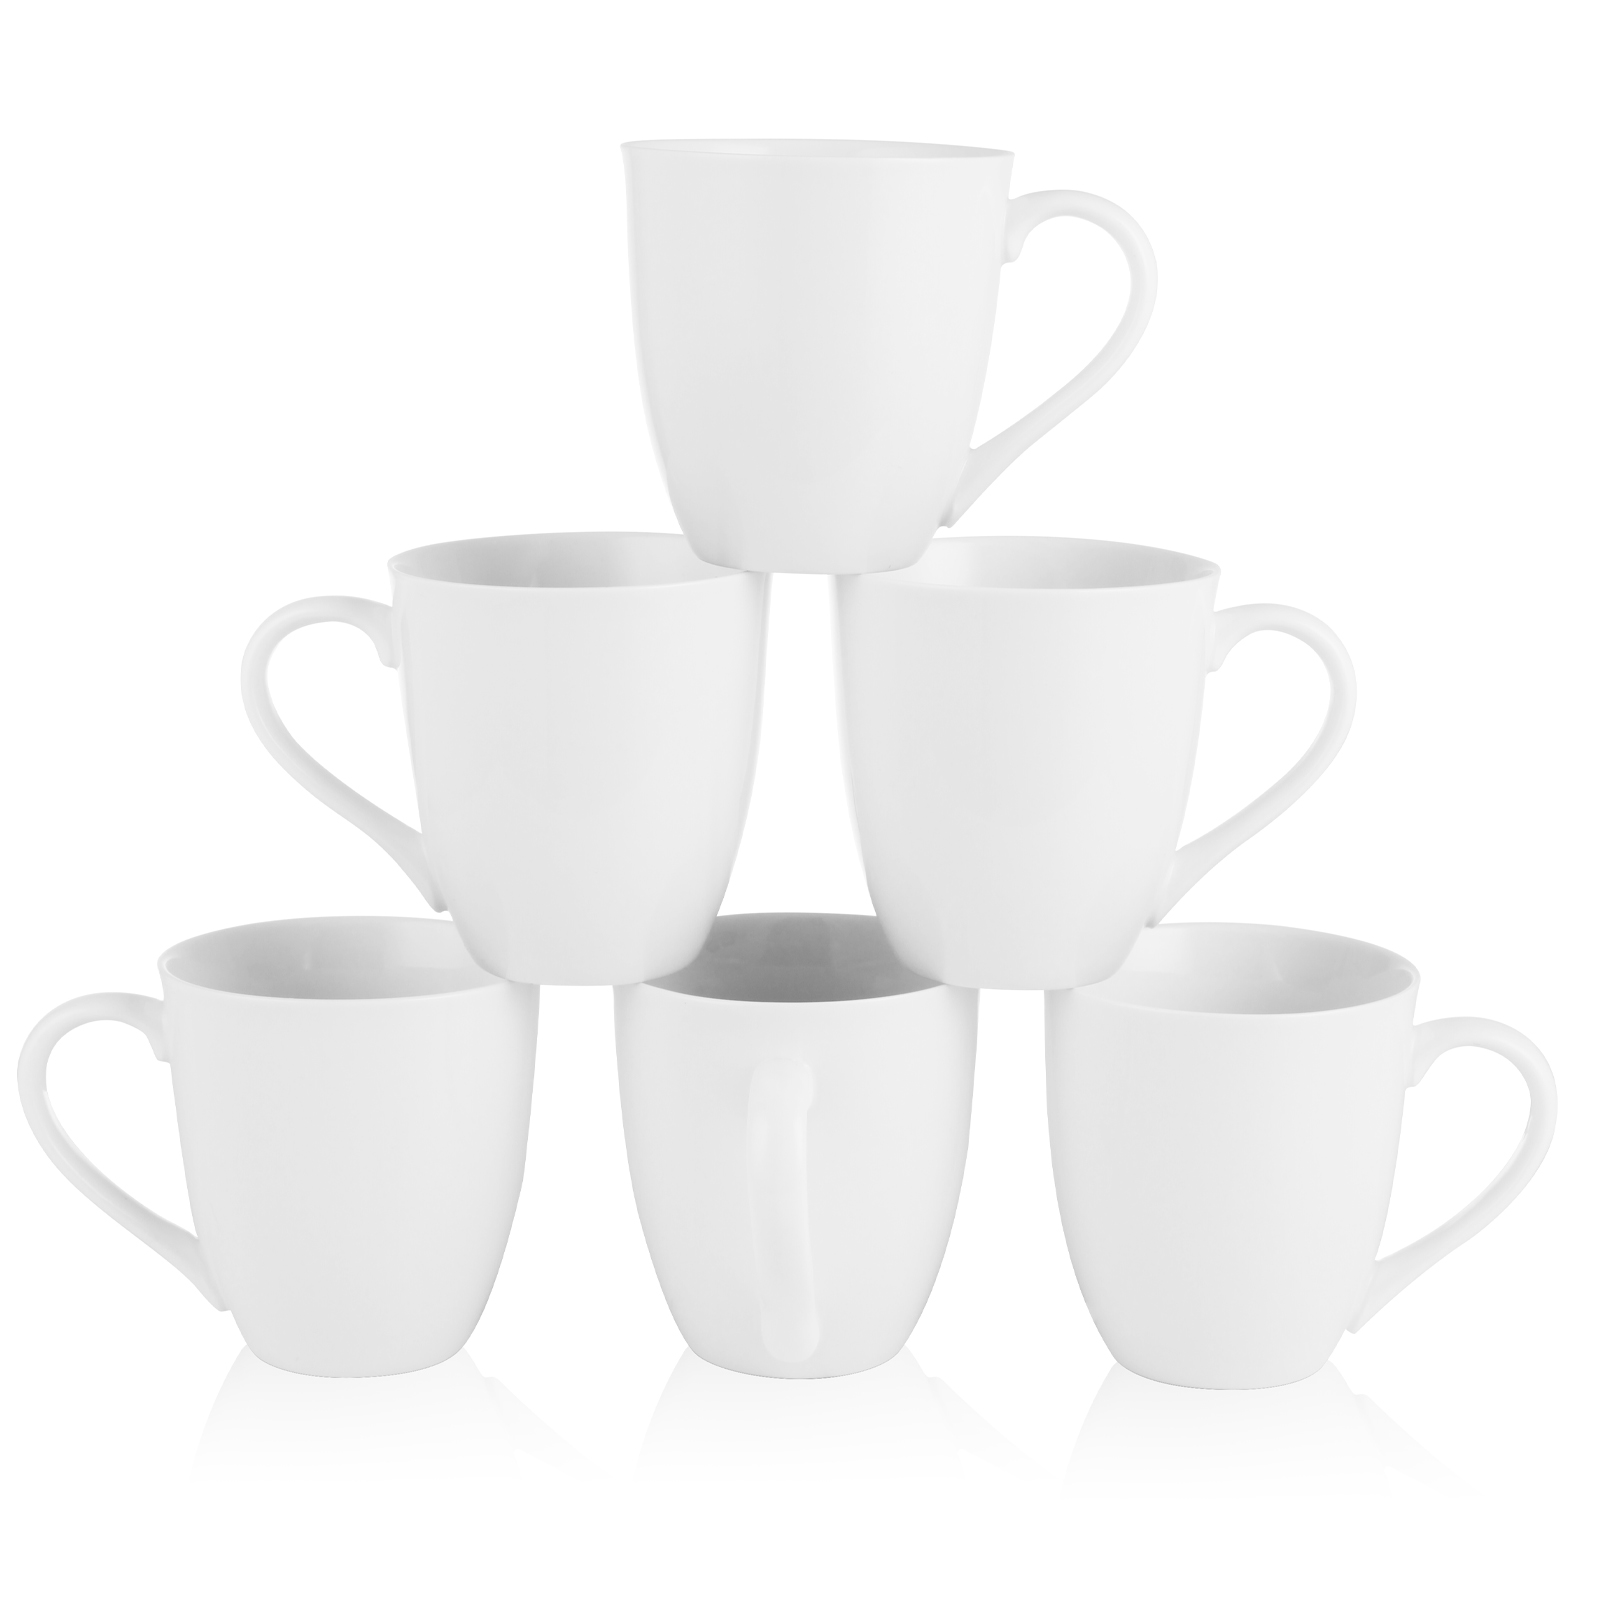 https://www.vicrays.com/wp-content/uploads/2021/06/11_white-mug-set.jpg